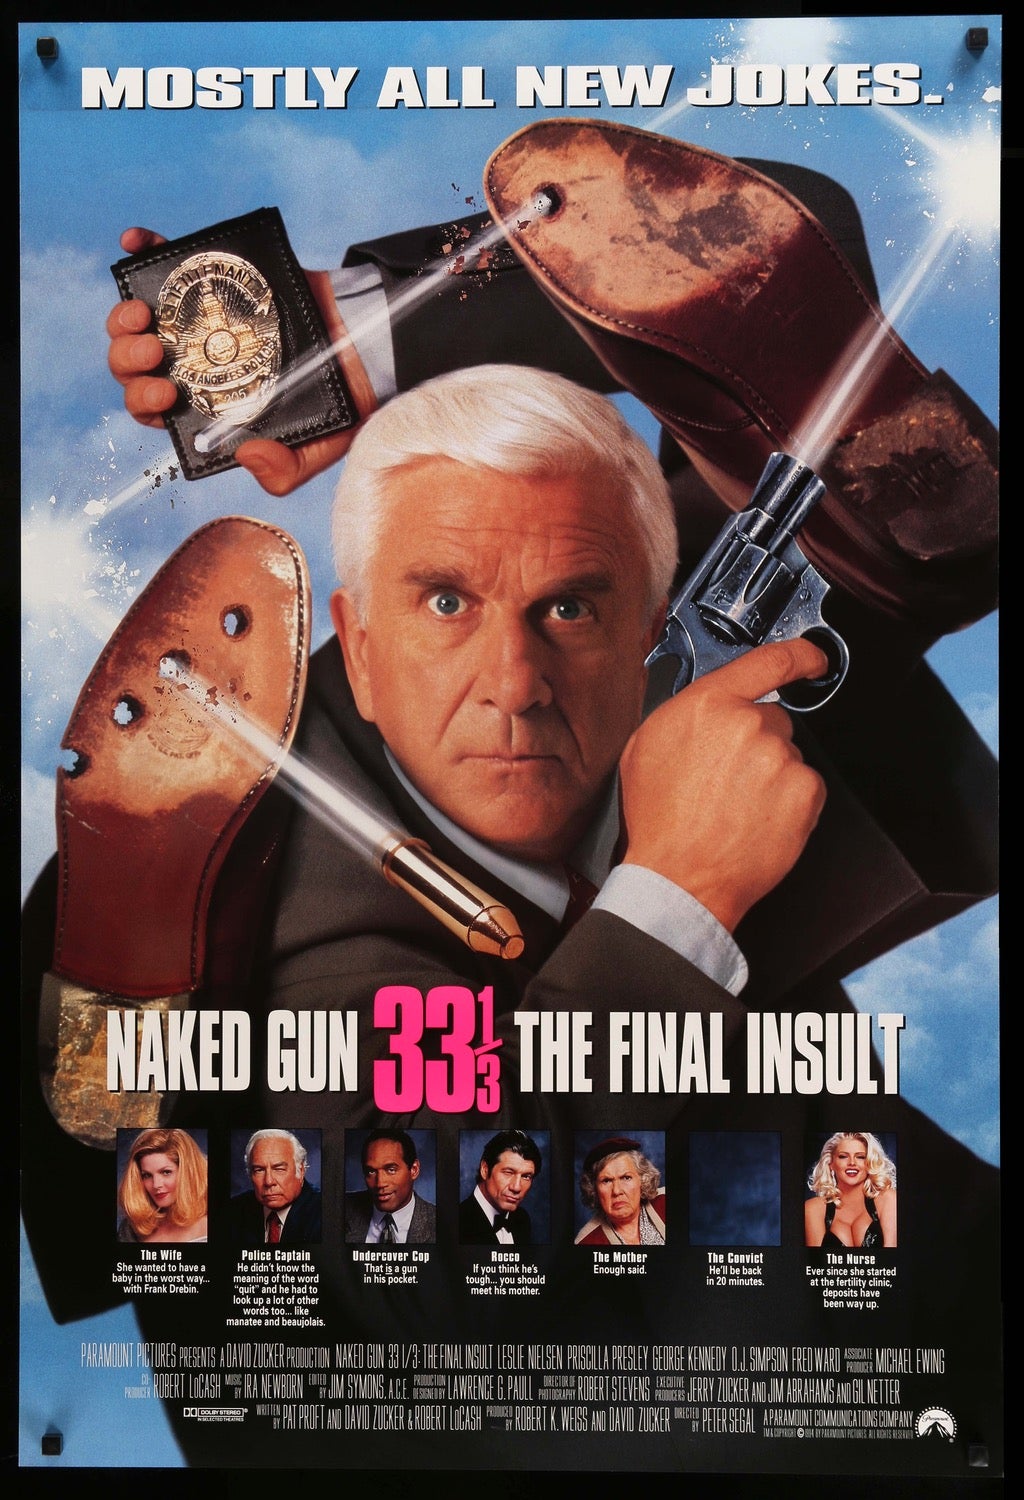 Naked Gun 33 1/3 (1994) original movie poster for sale at Original Film Art